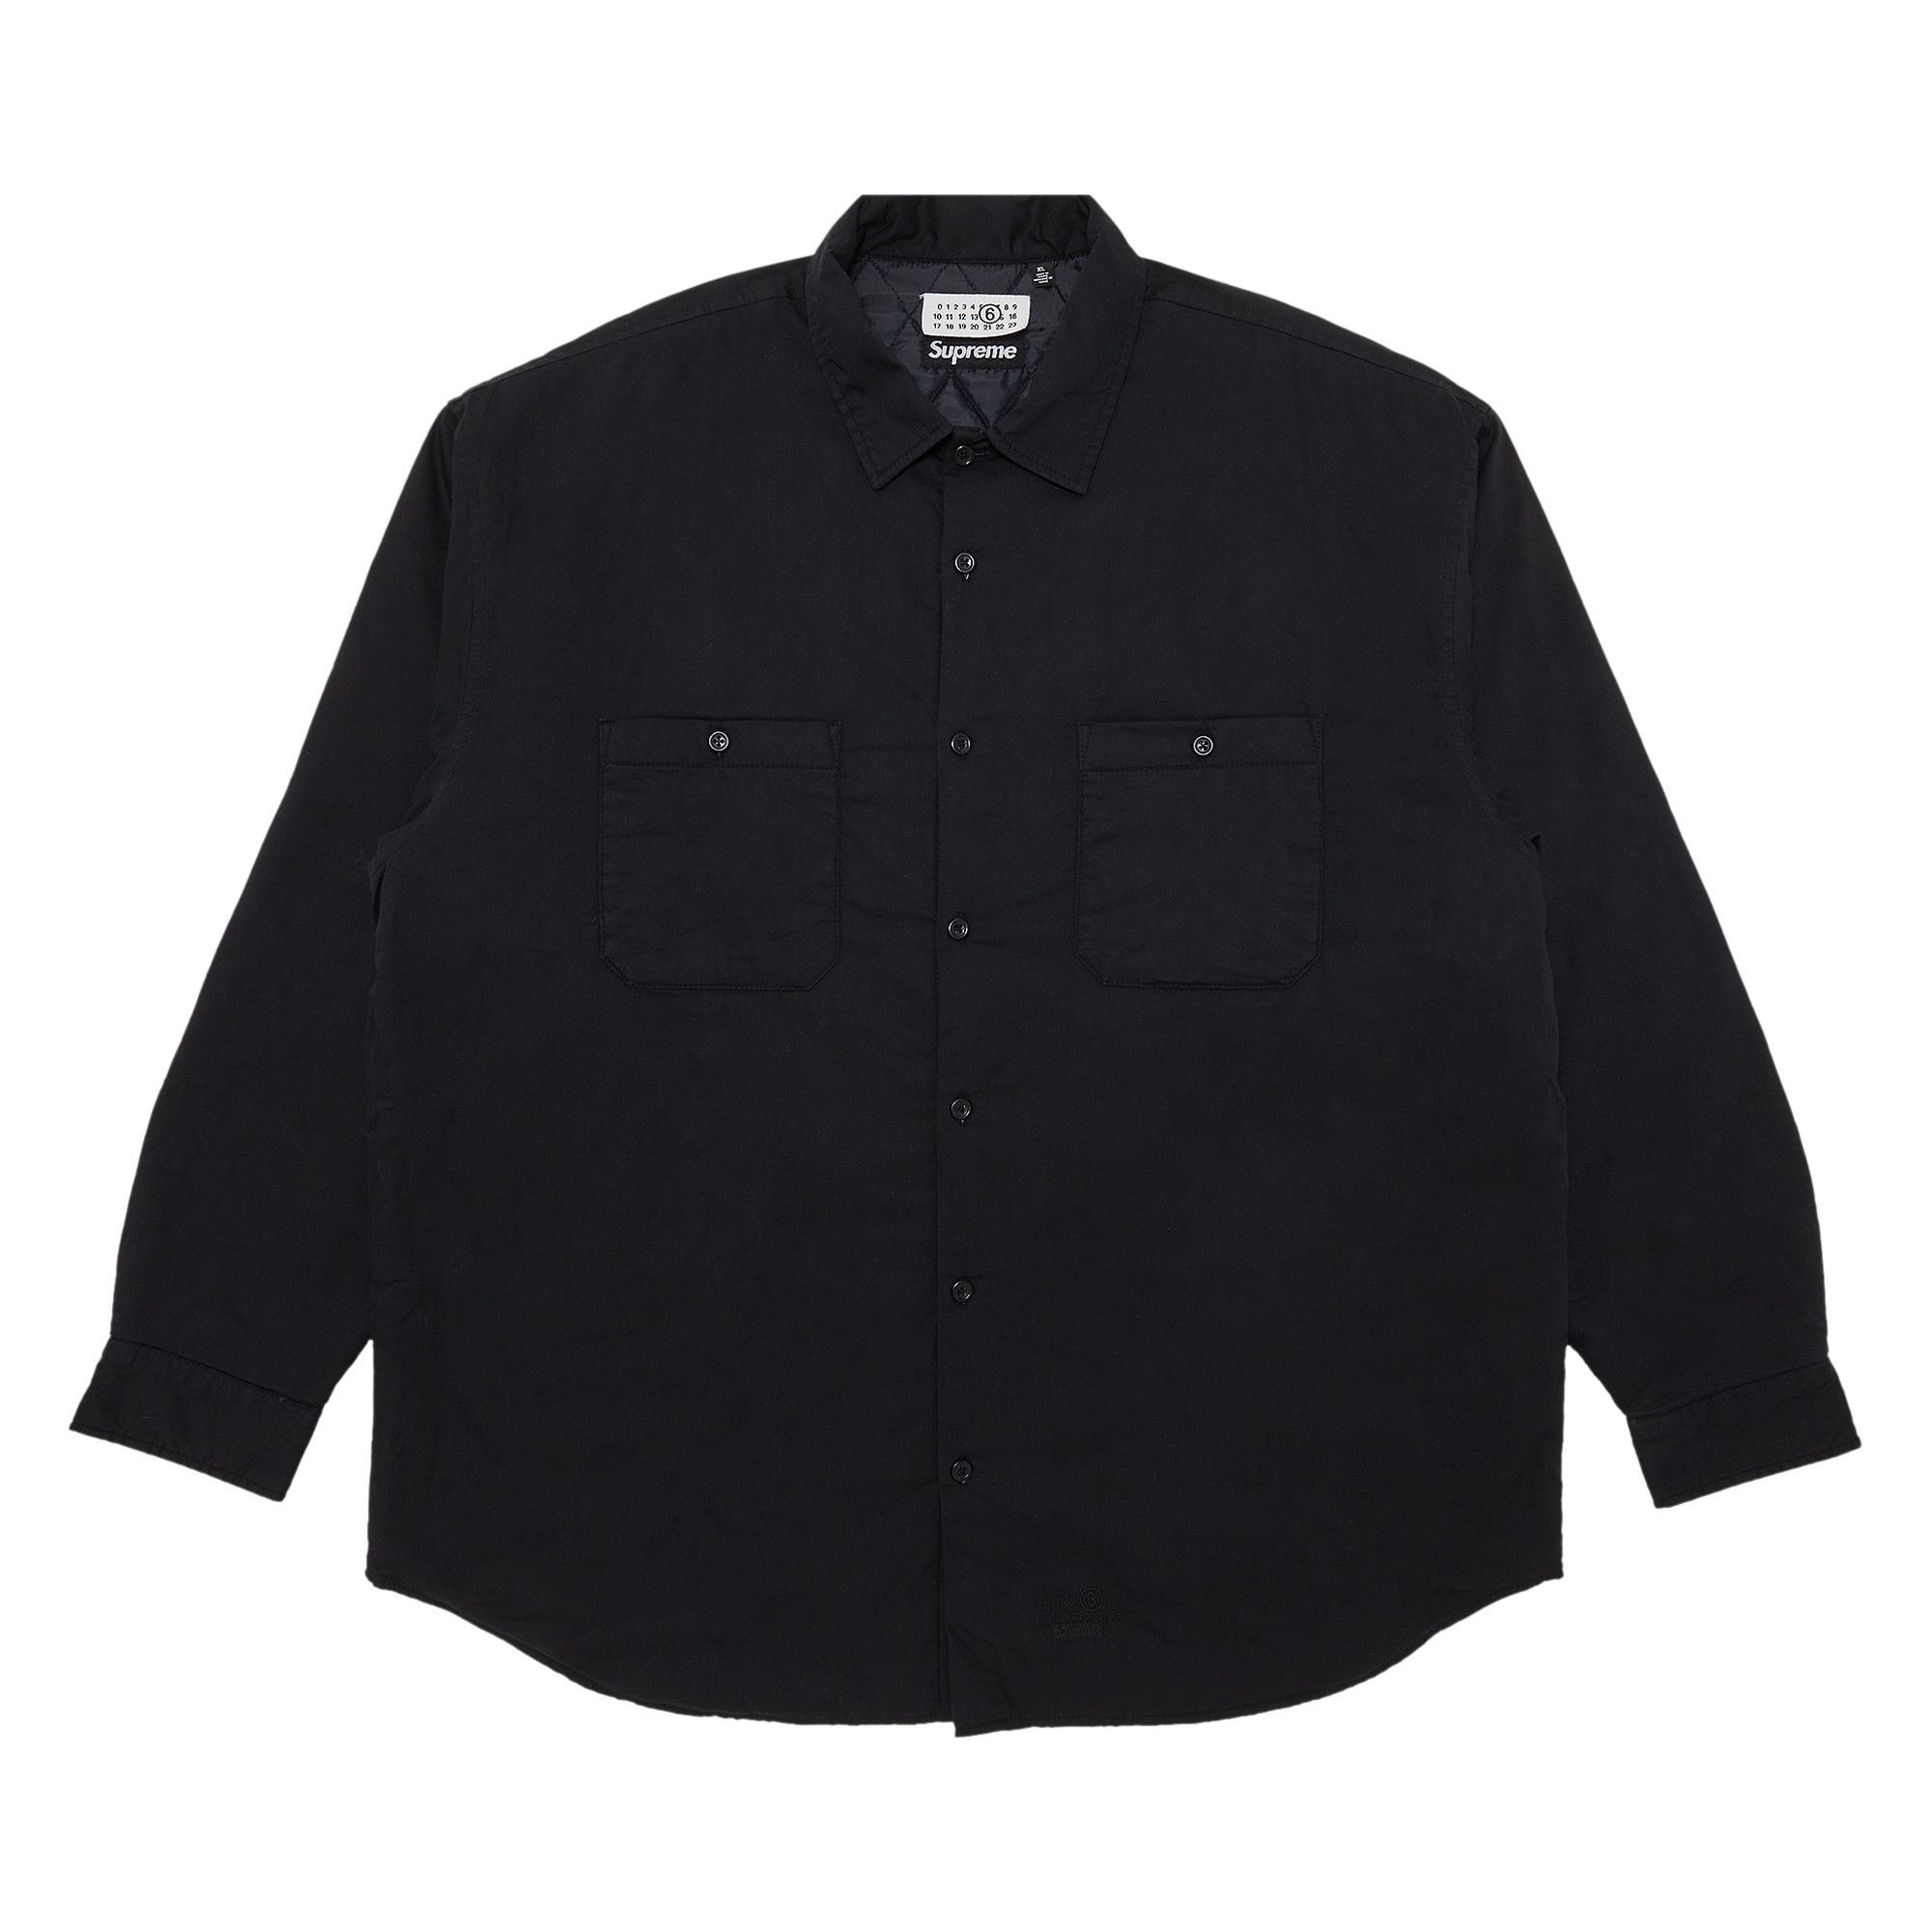 Supreme x MM6 Maison Margiela Padded Shirt 'Black' - 1